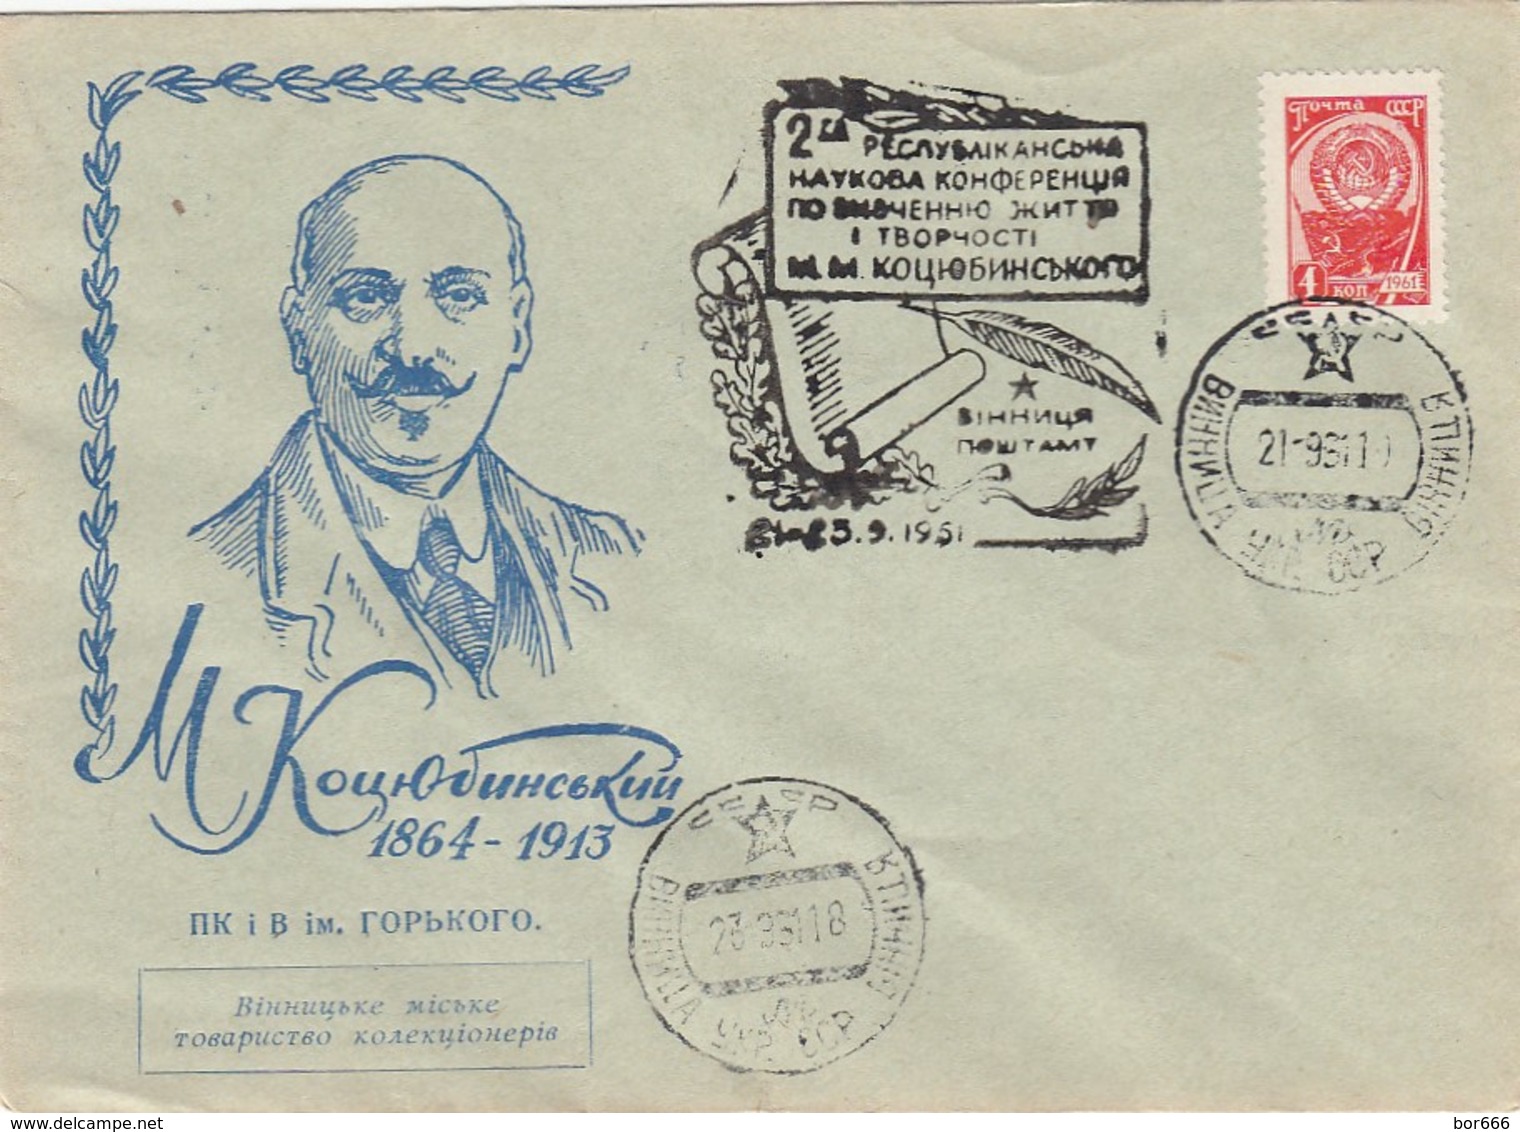 GOOD USSR / UKRAINE Postal Cover 1961 - Kozyubinsky - Ukraine